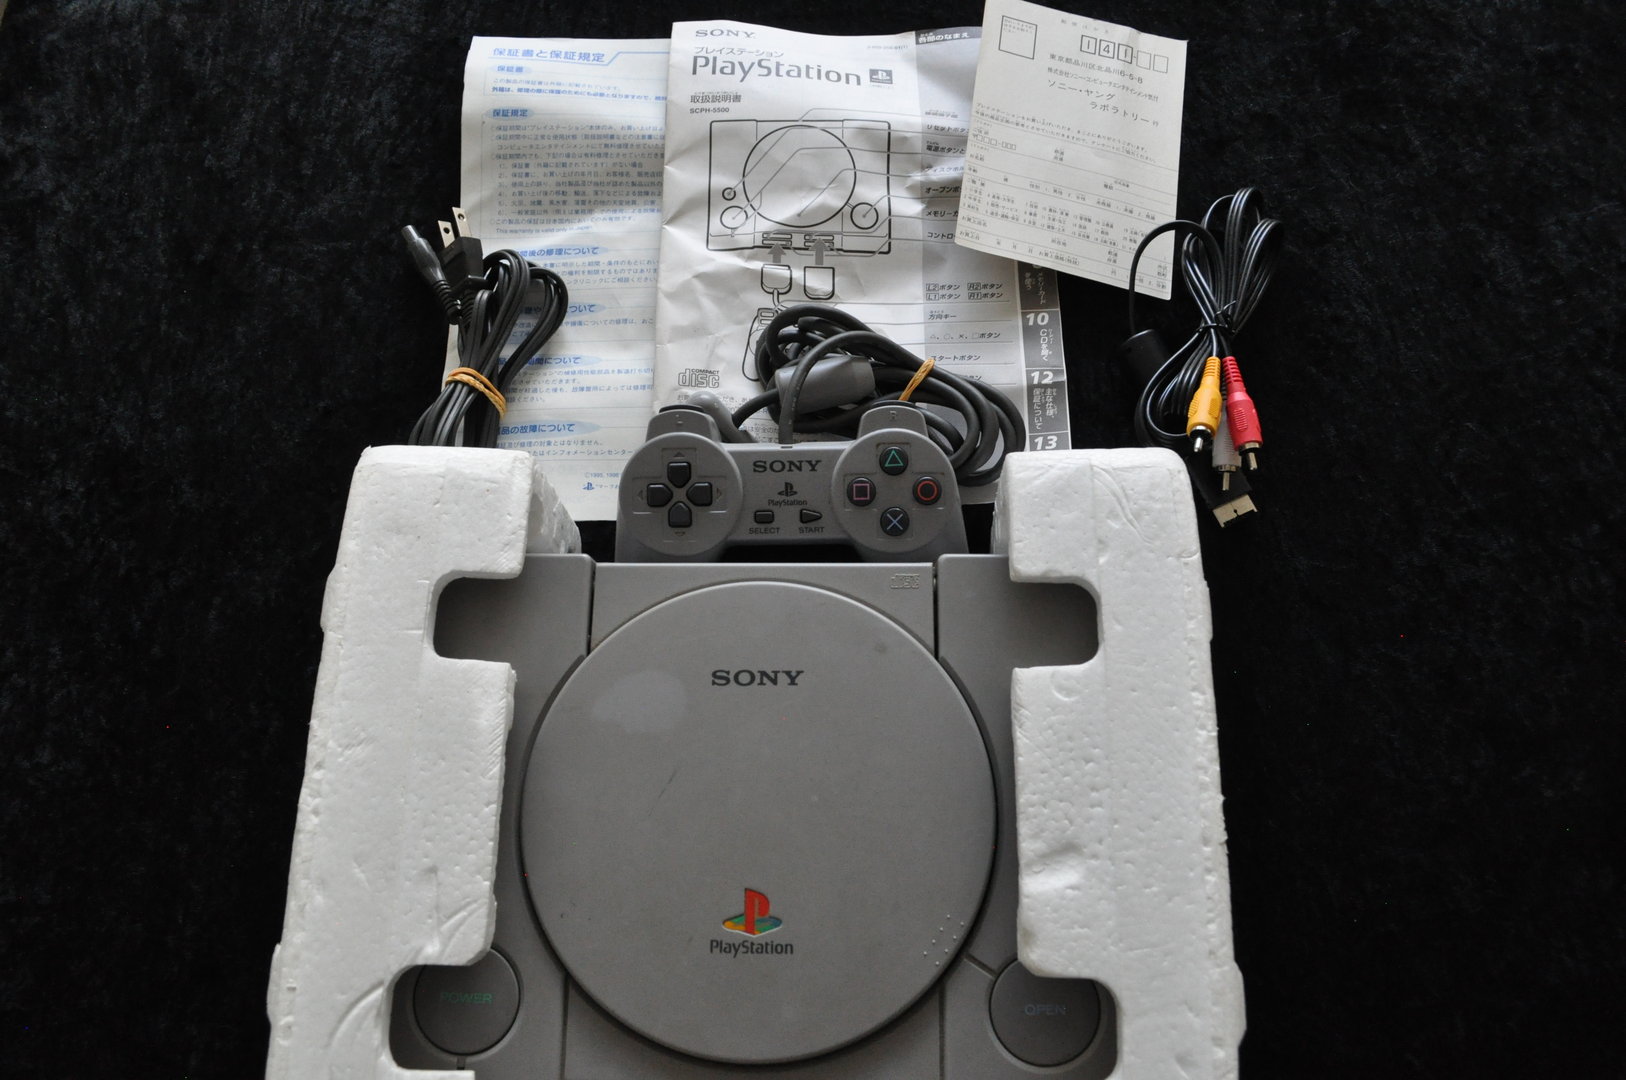 Sony Playstation 1 SCPH-5500 NTSC-J Boxed - Retrogameking.com 